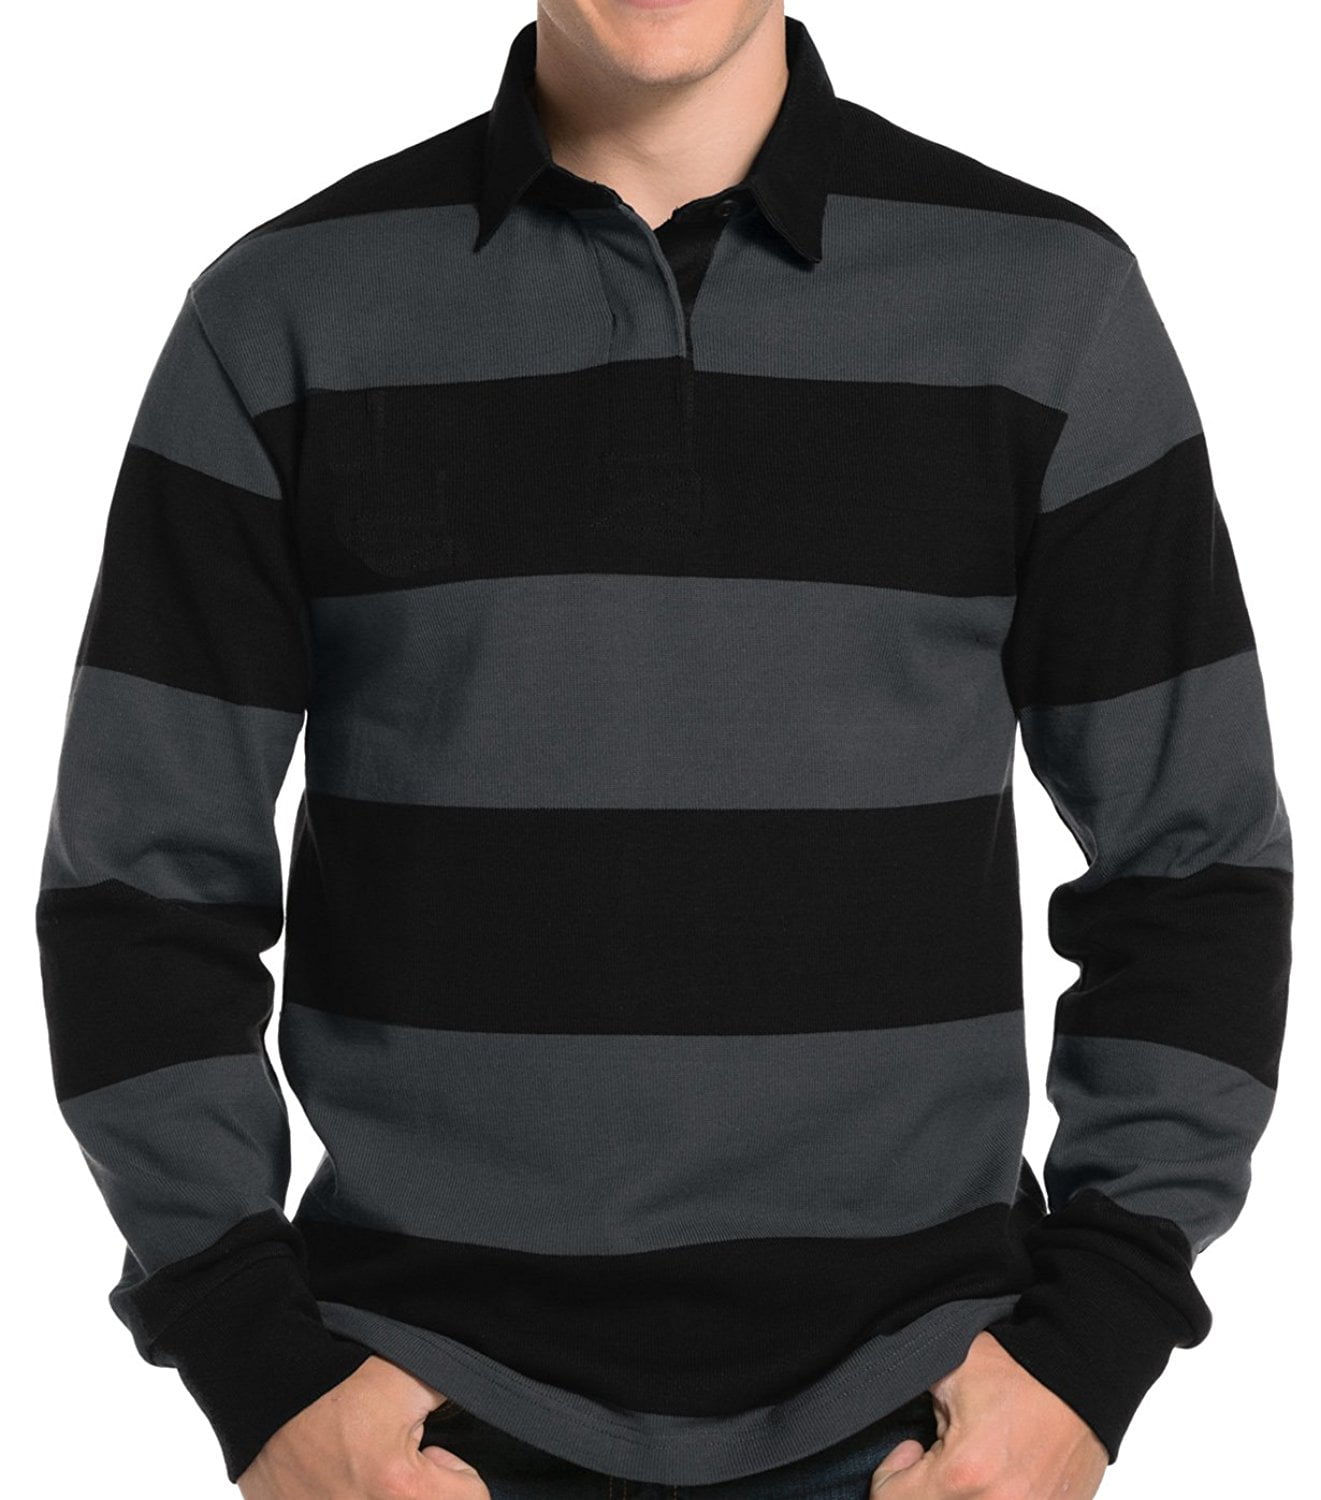 Mens Long Sleeve Rugby Shirt Black/Graphite, 4XL